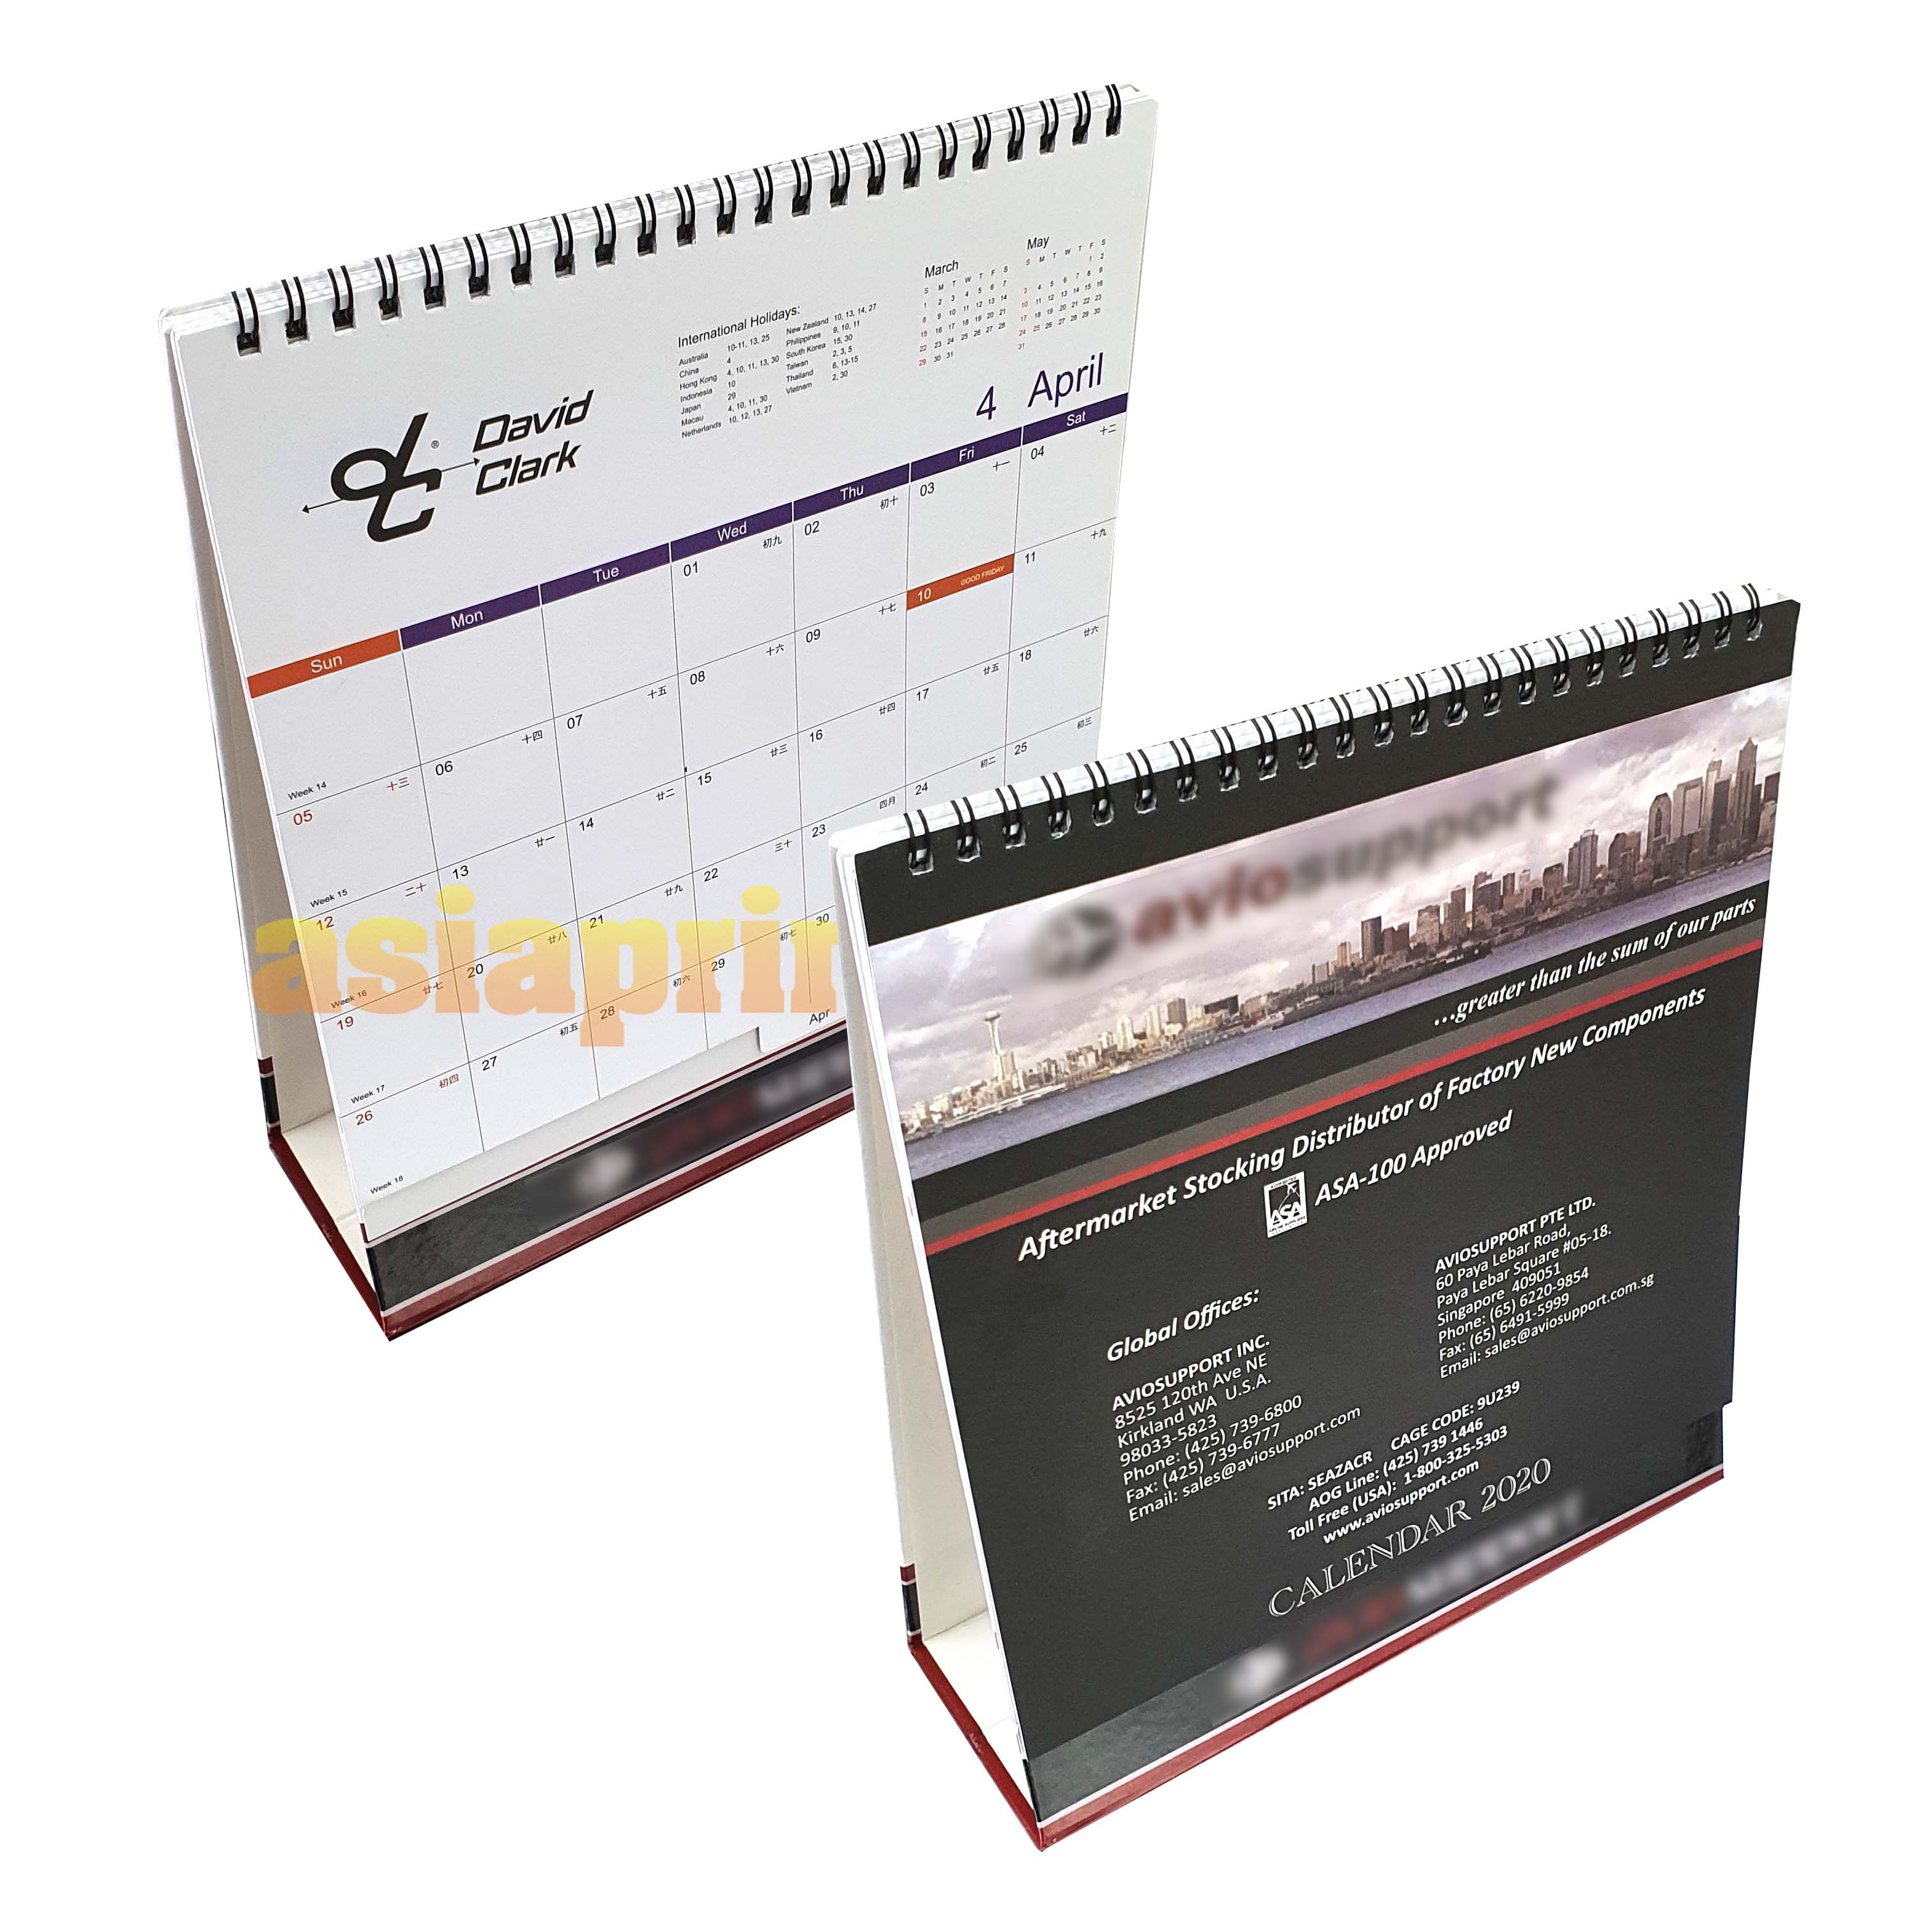 Kedai cetak kalendar, calendar shop malaysia, calendars printing company, calendars design service